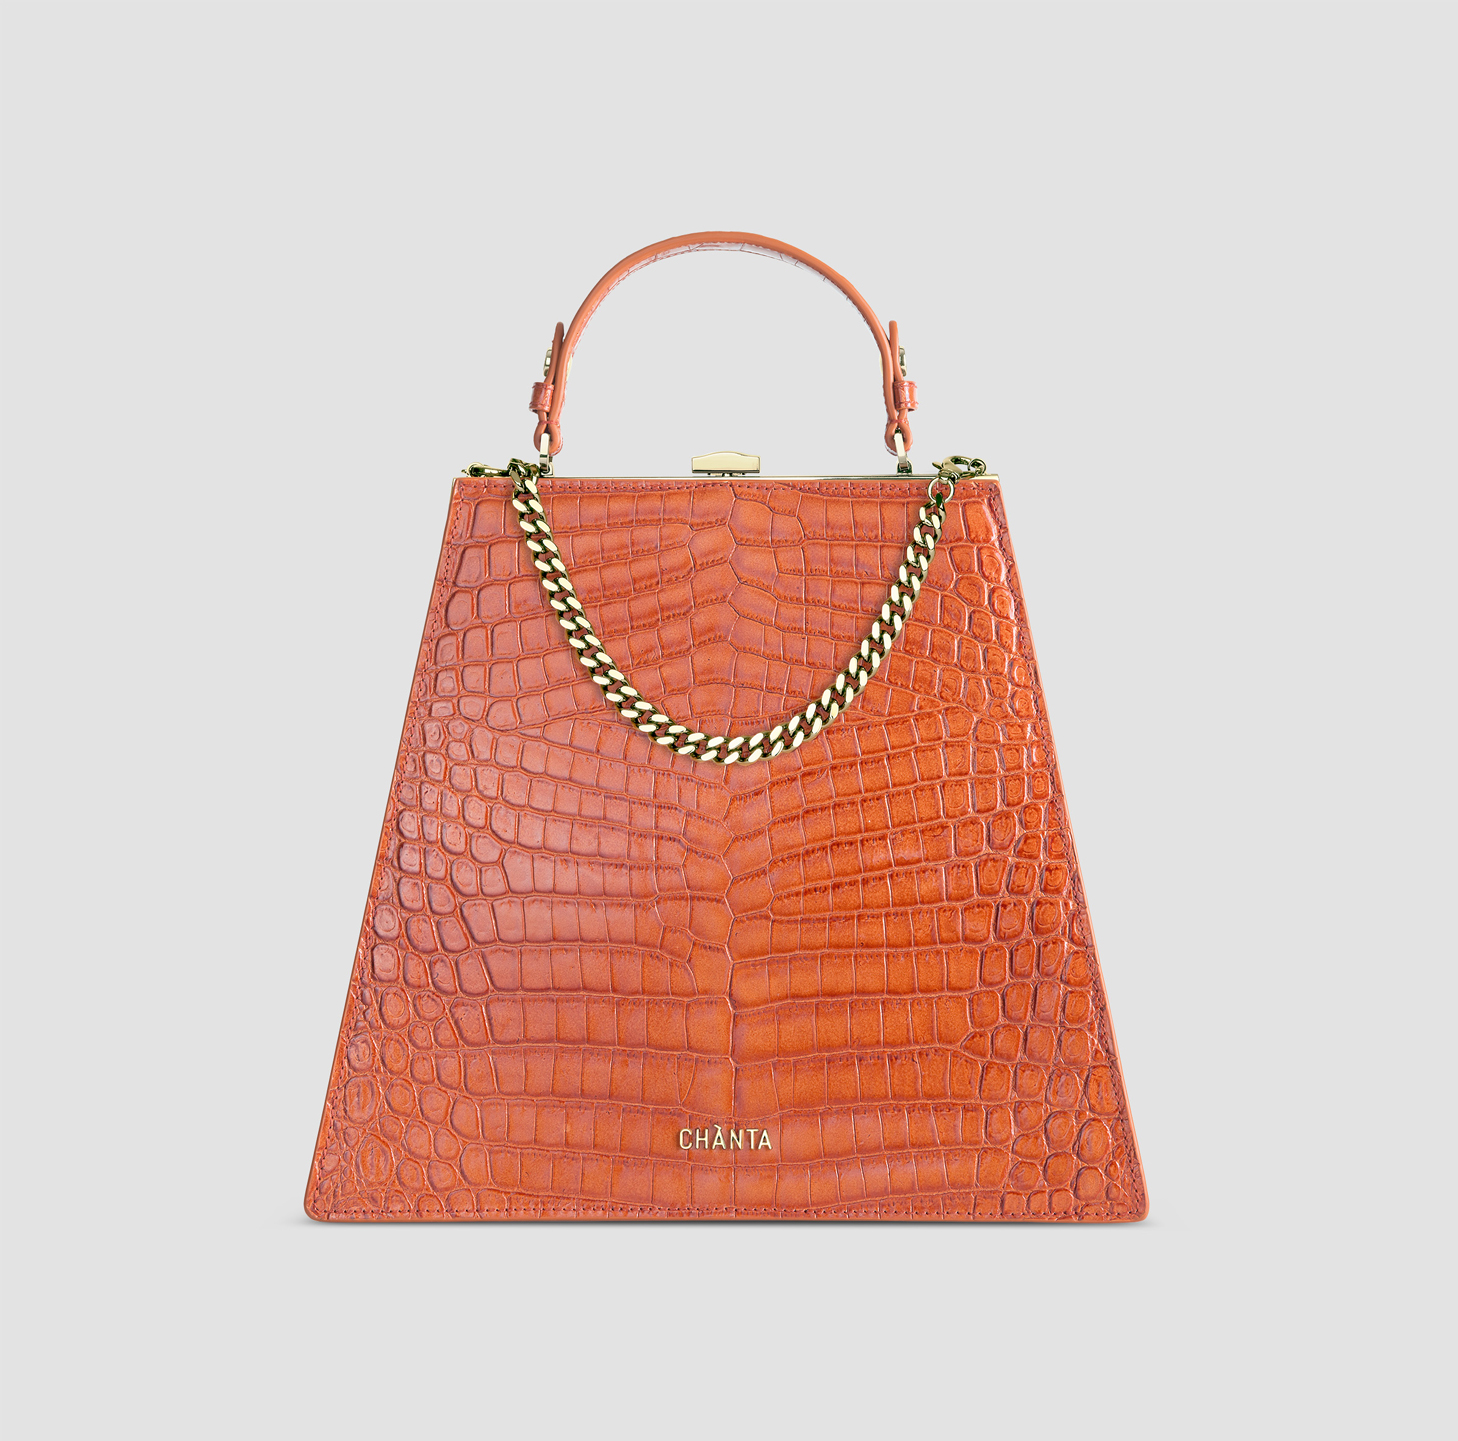 Italian Leather Orange Handbag With Gold Linked Chain